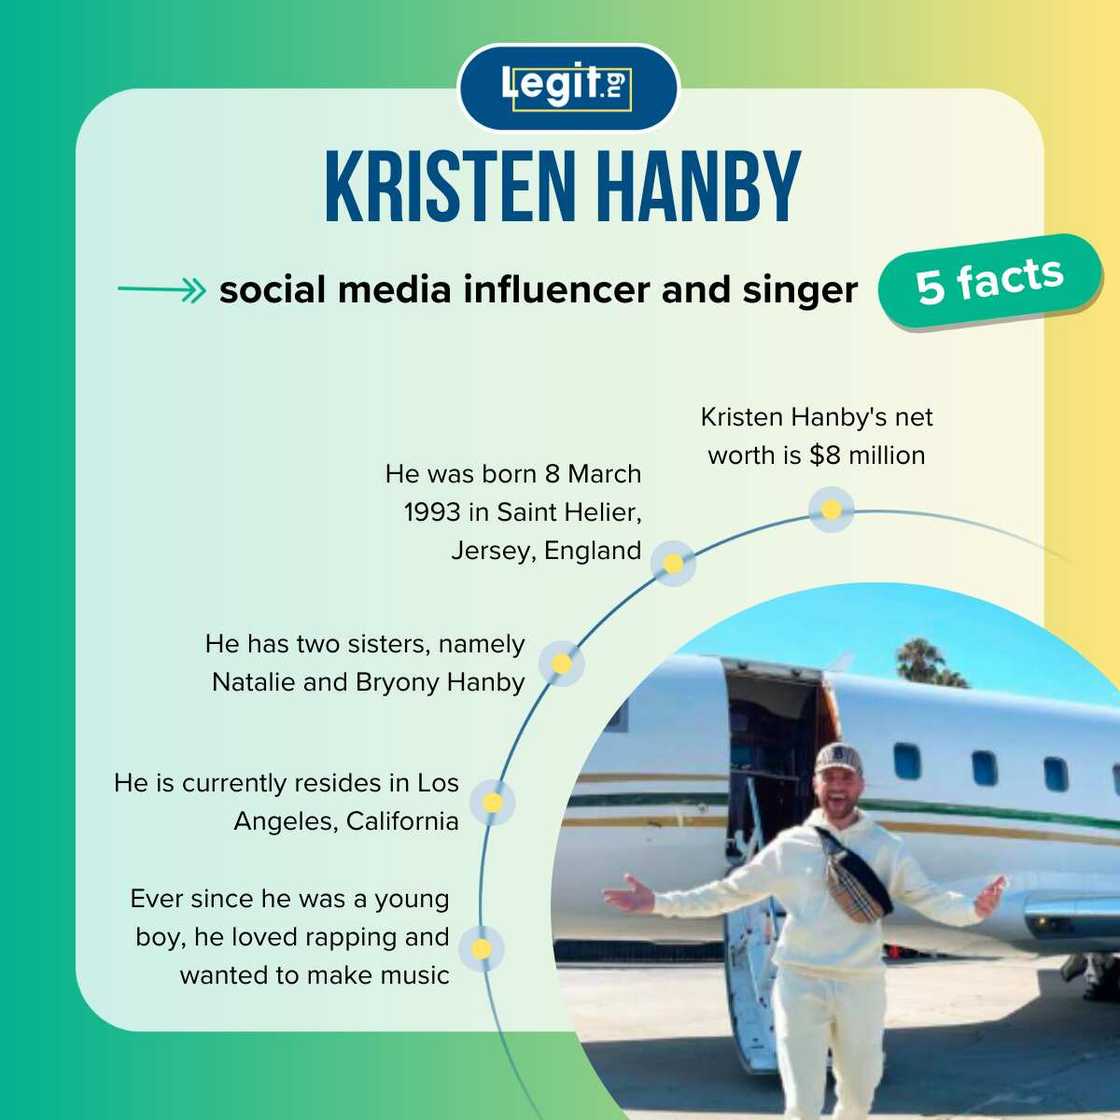 Kristen Hanby’s biography